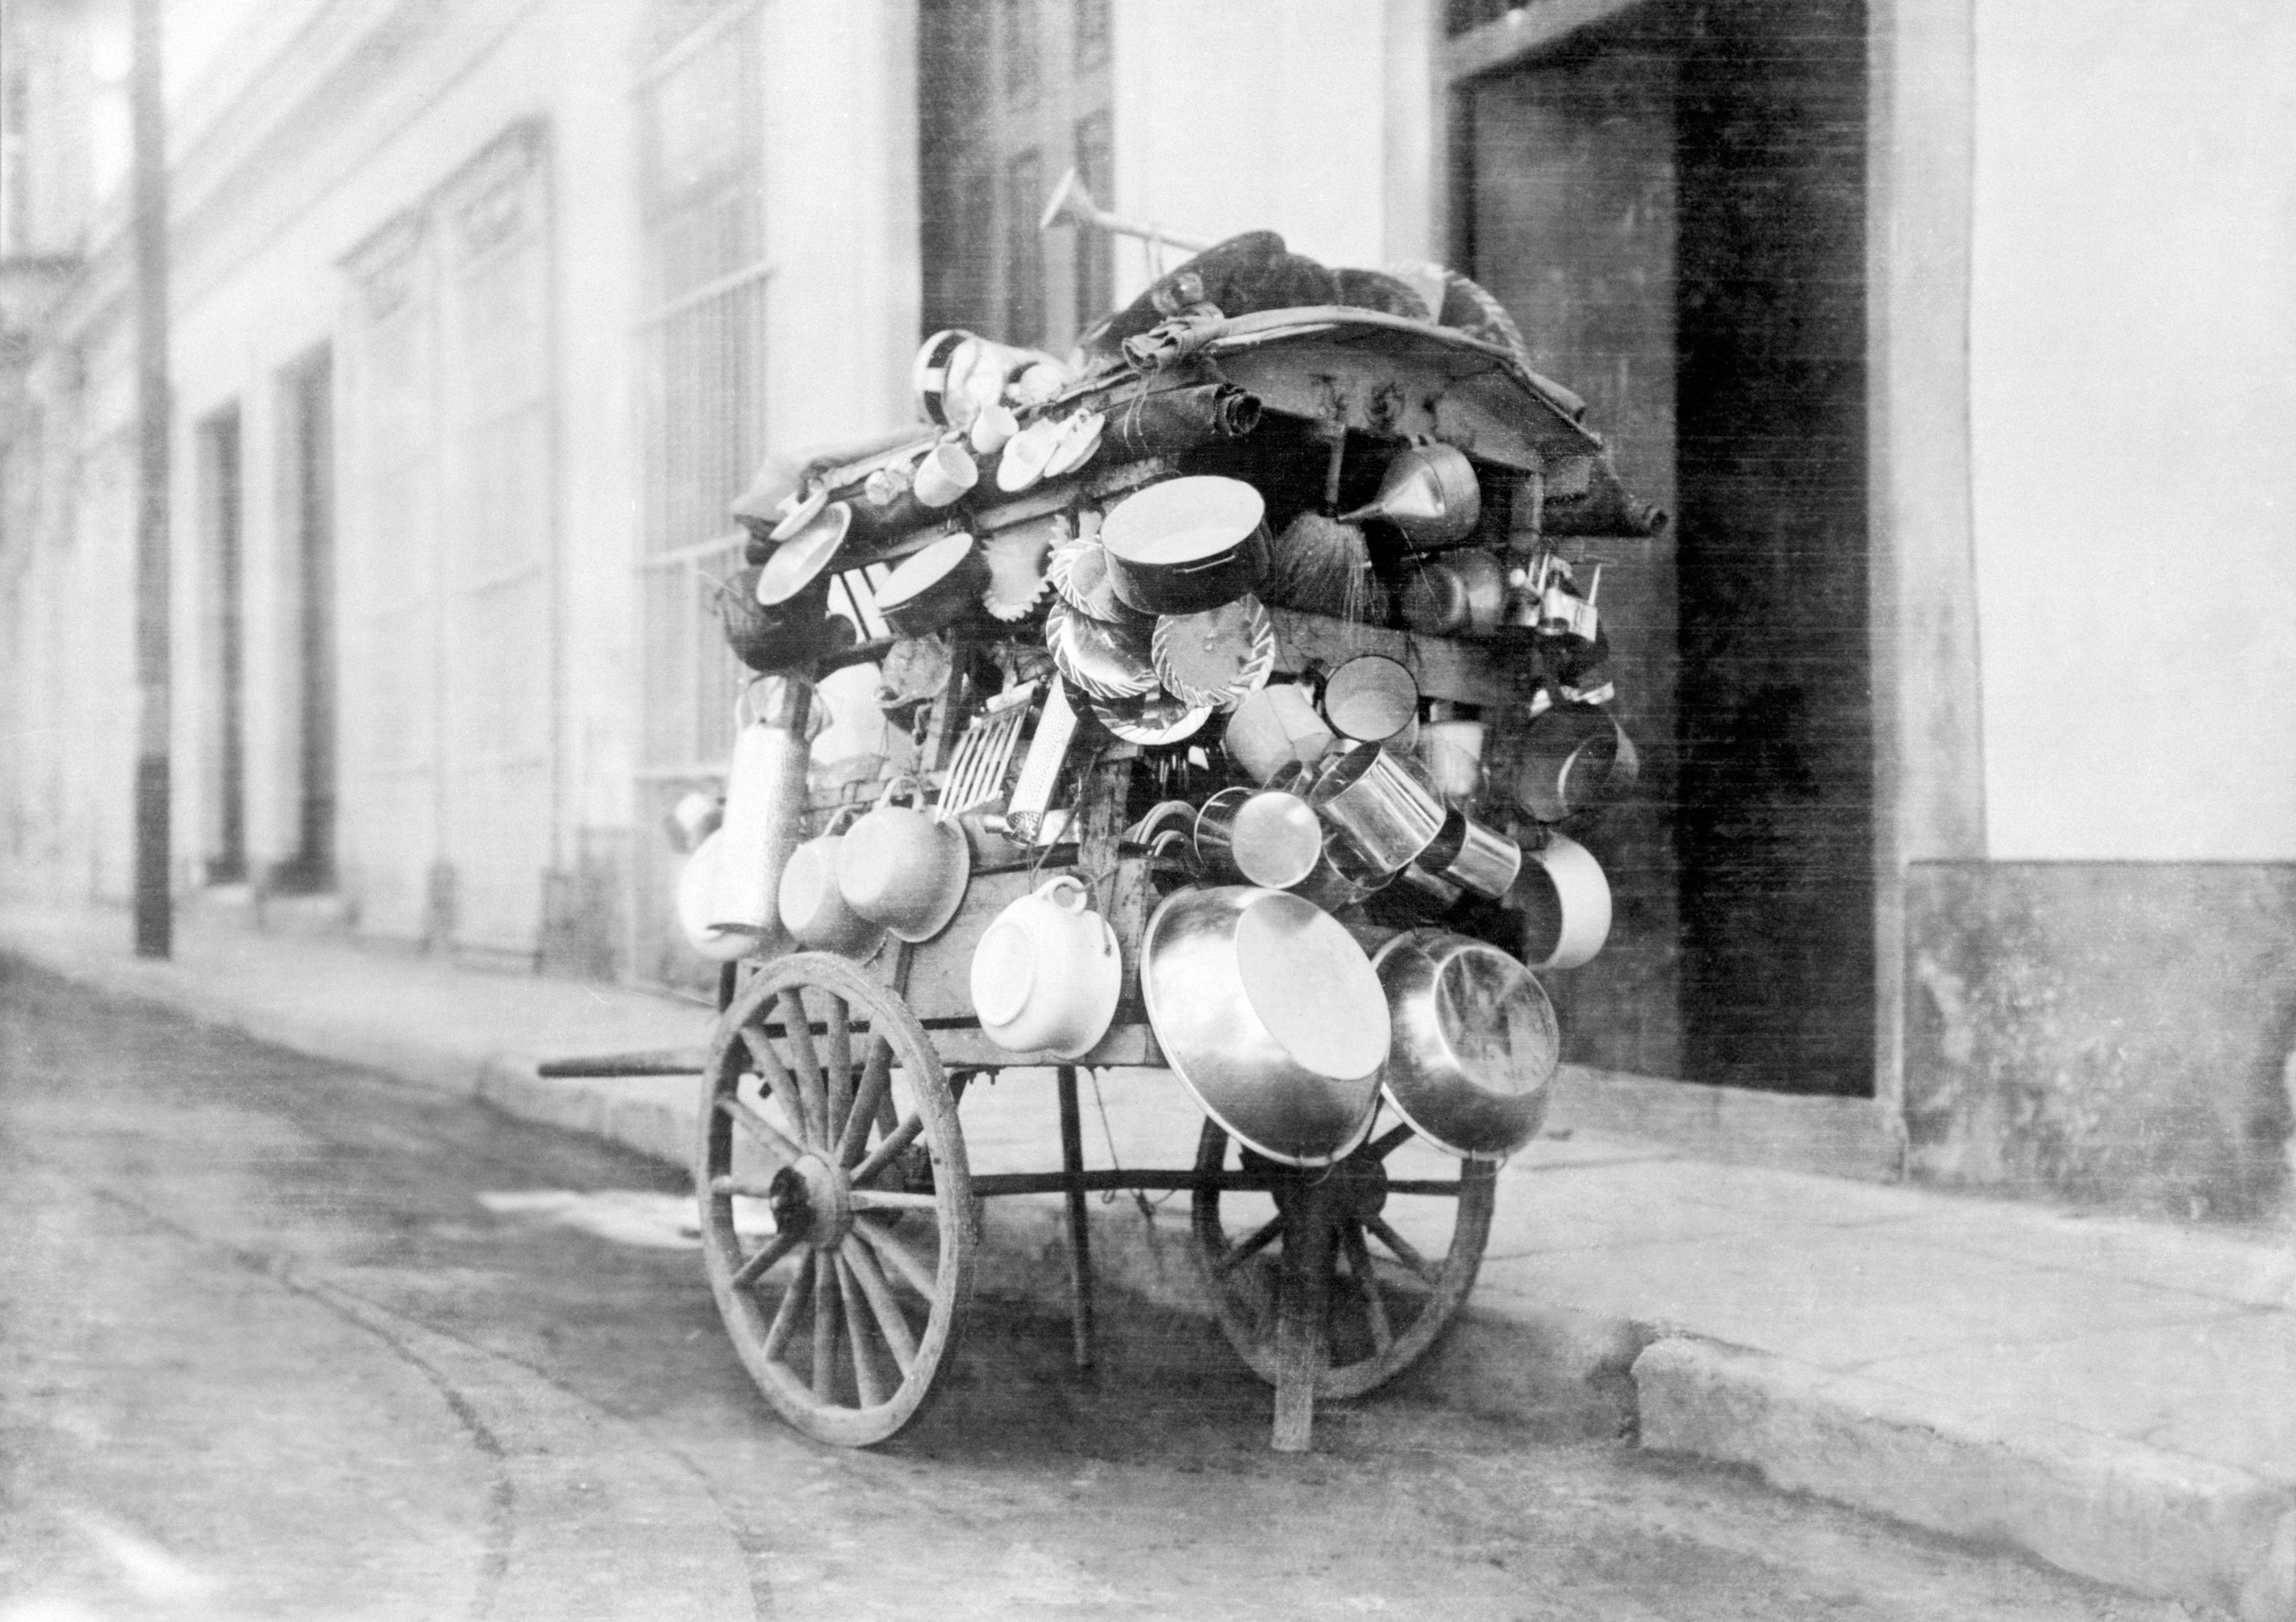 A peddler's cart in Havana, Cuba, 1925.